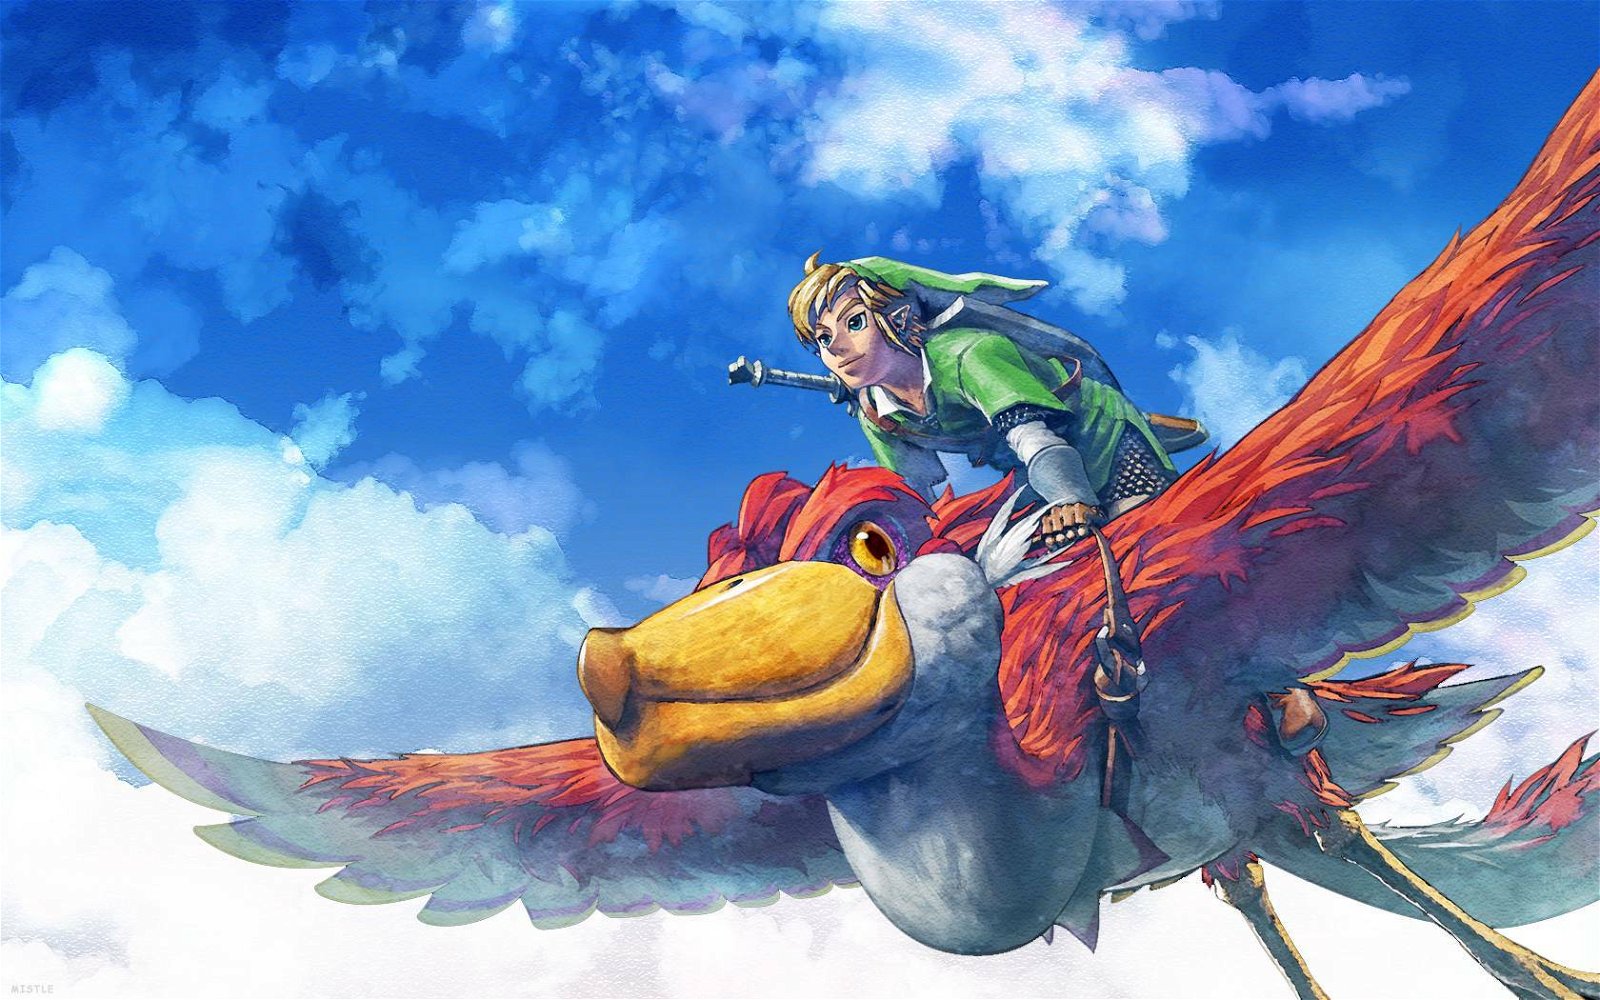 Immagine di The Legend of Zelda Skyward Sword: nuovo amiibo crea polemica tra i fan